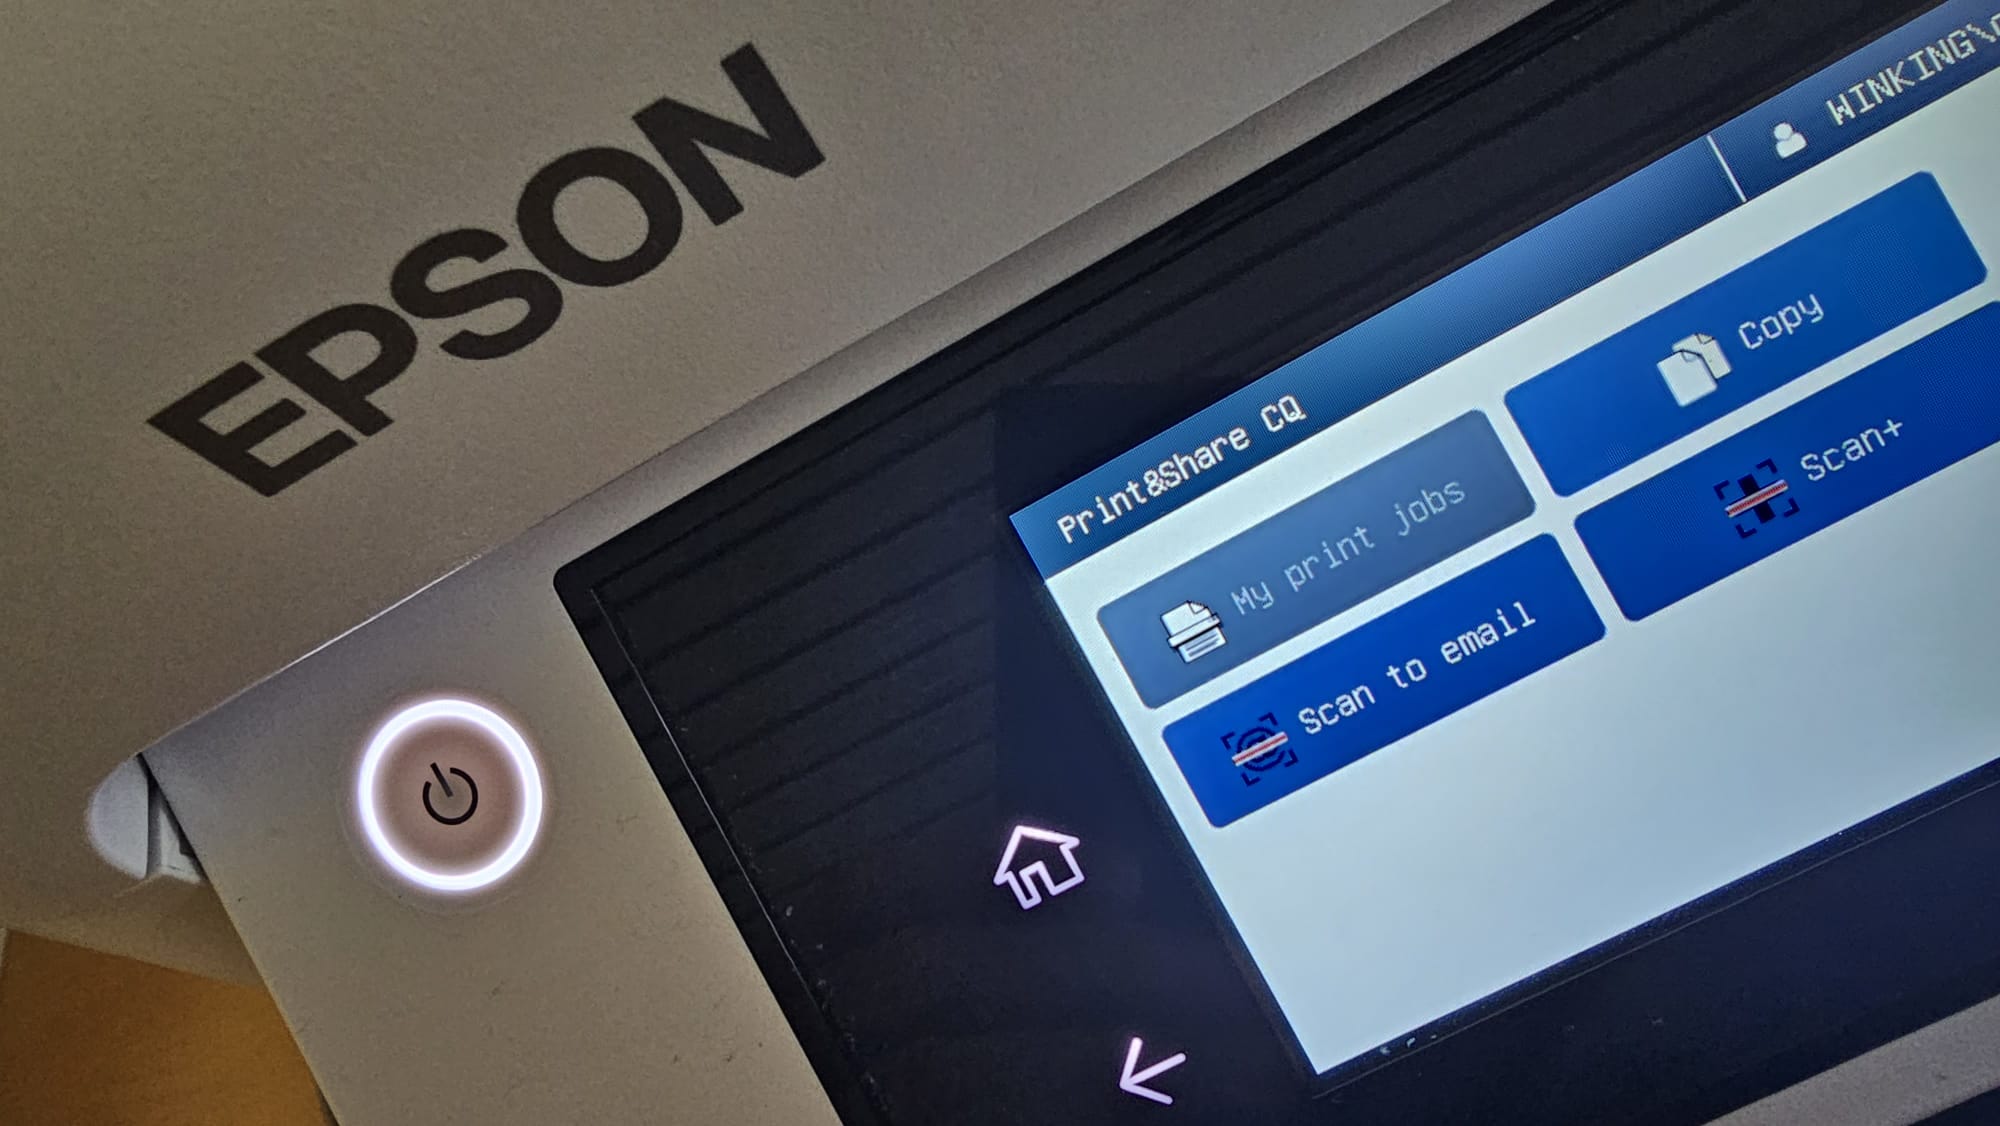 Print&Share CQ on Epson printer